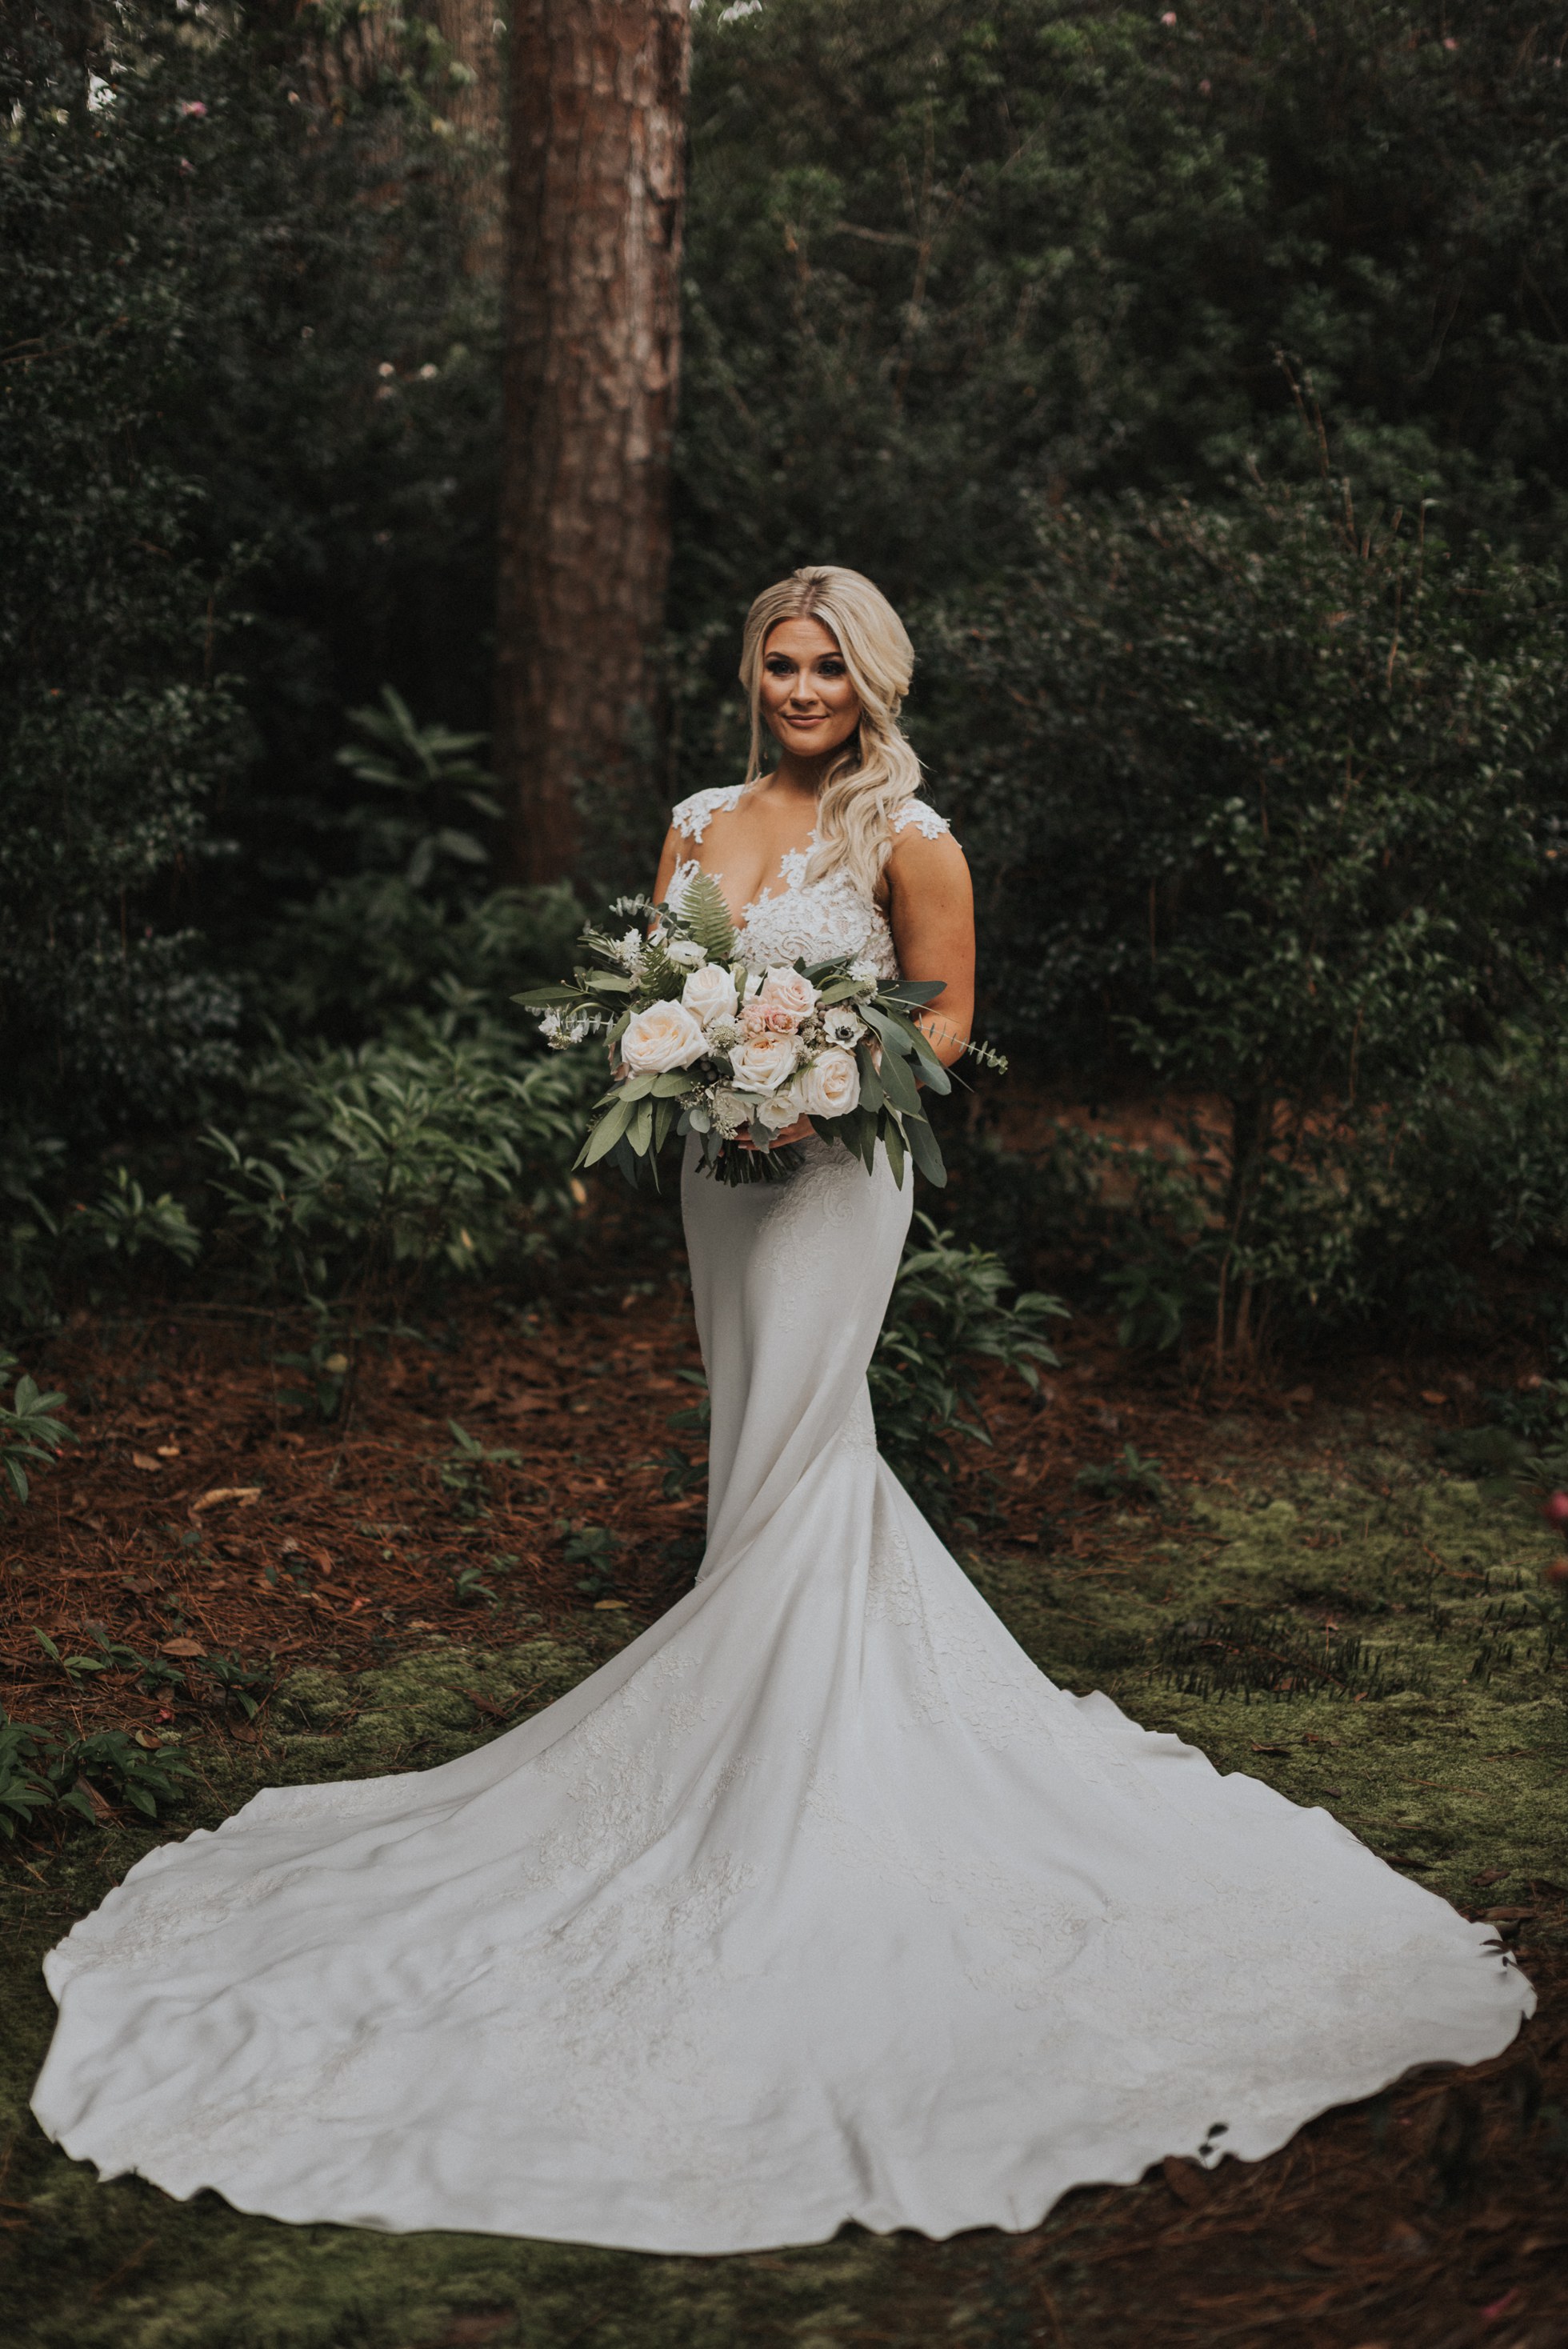 Louisiana bridal photo in the woods